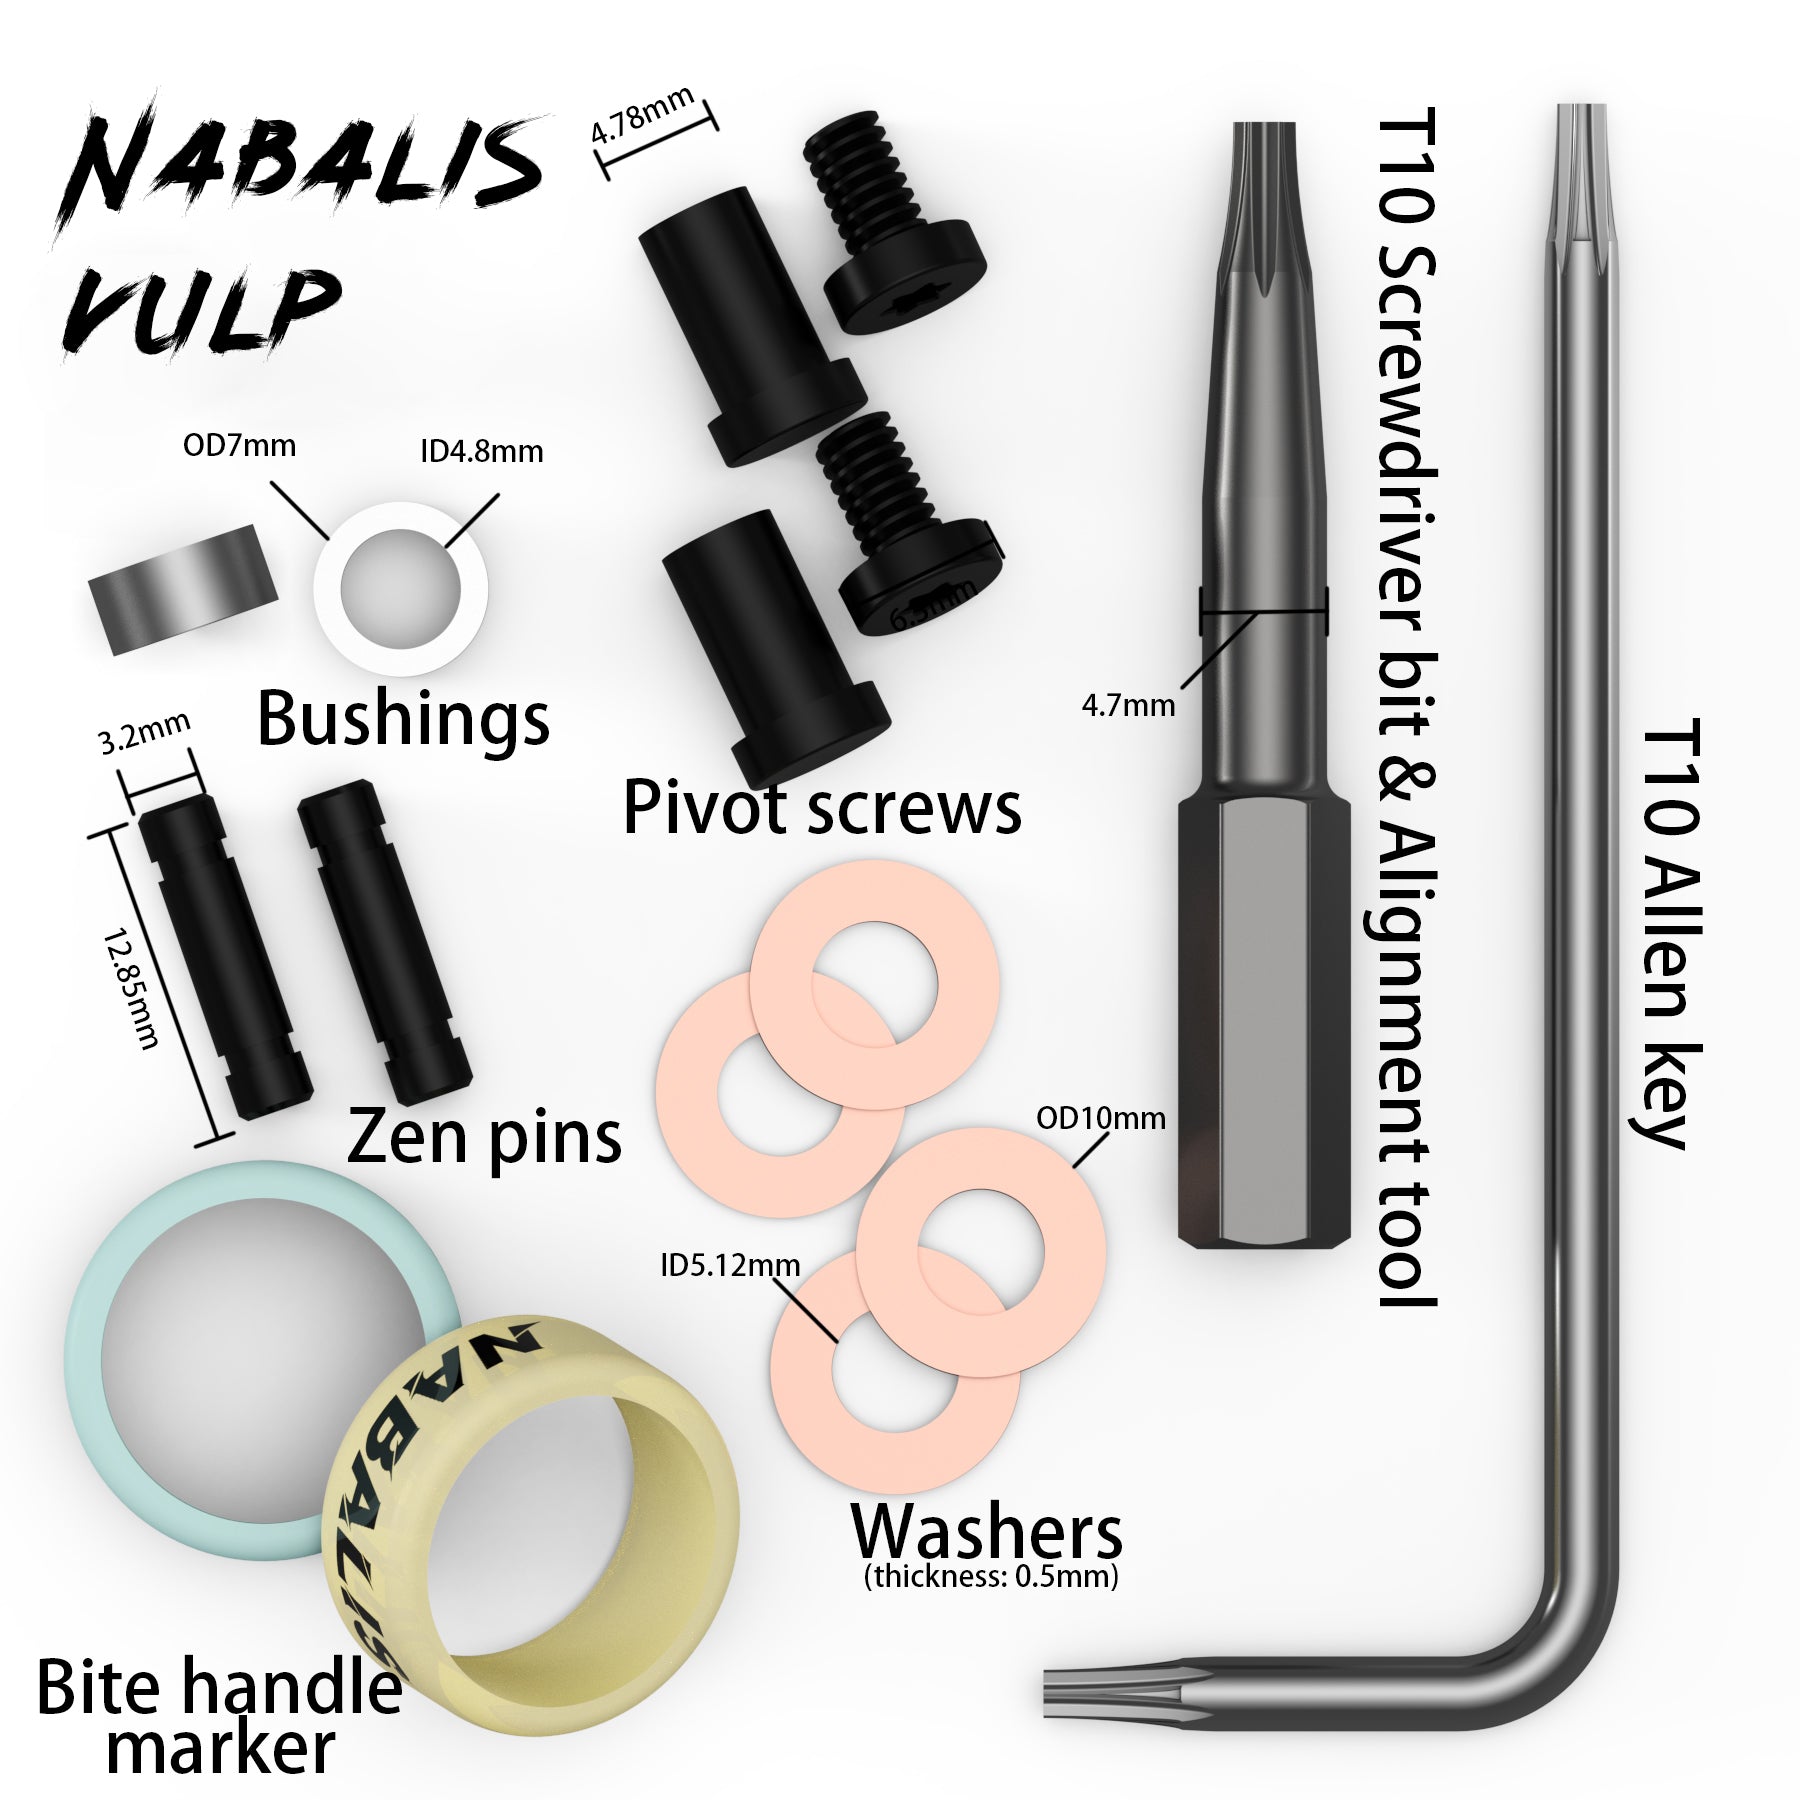 Vulp Hardware Kit